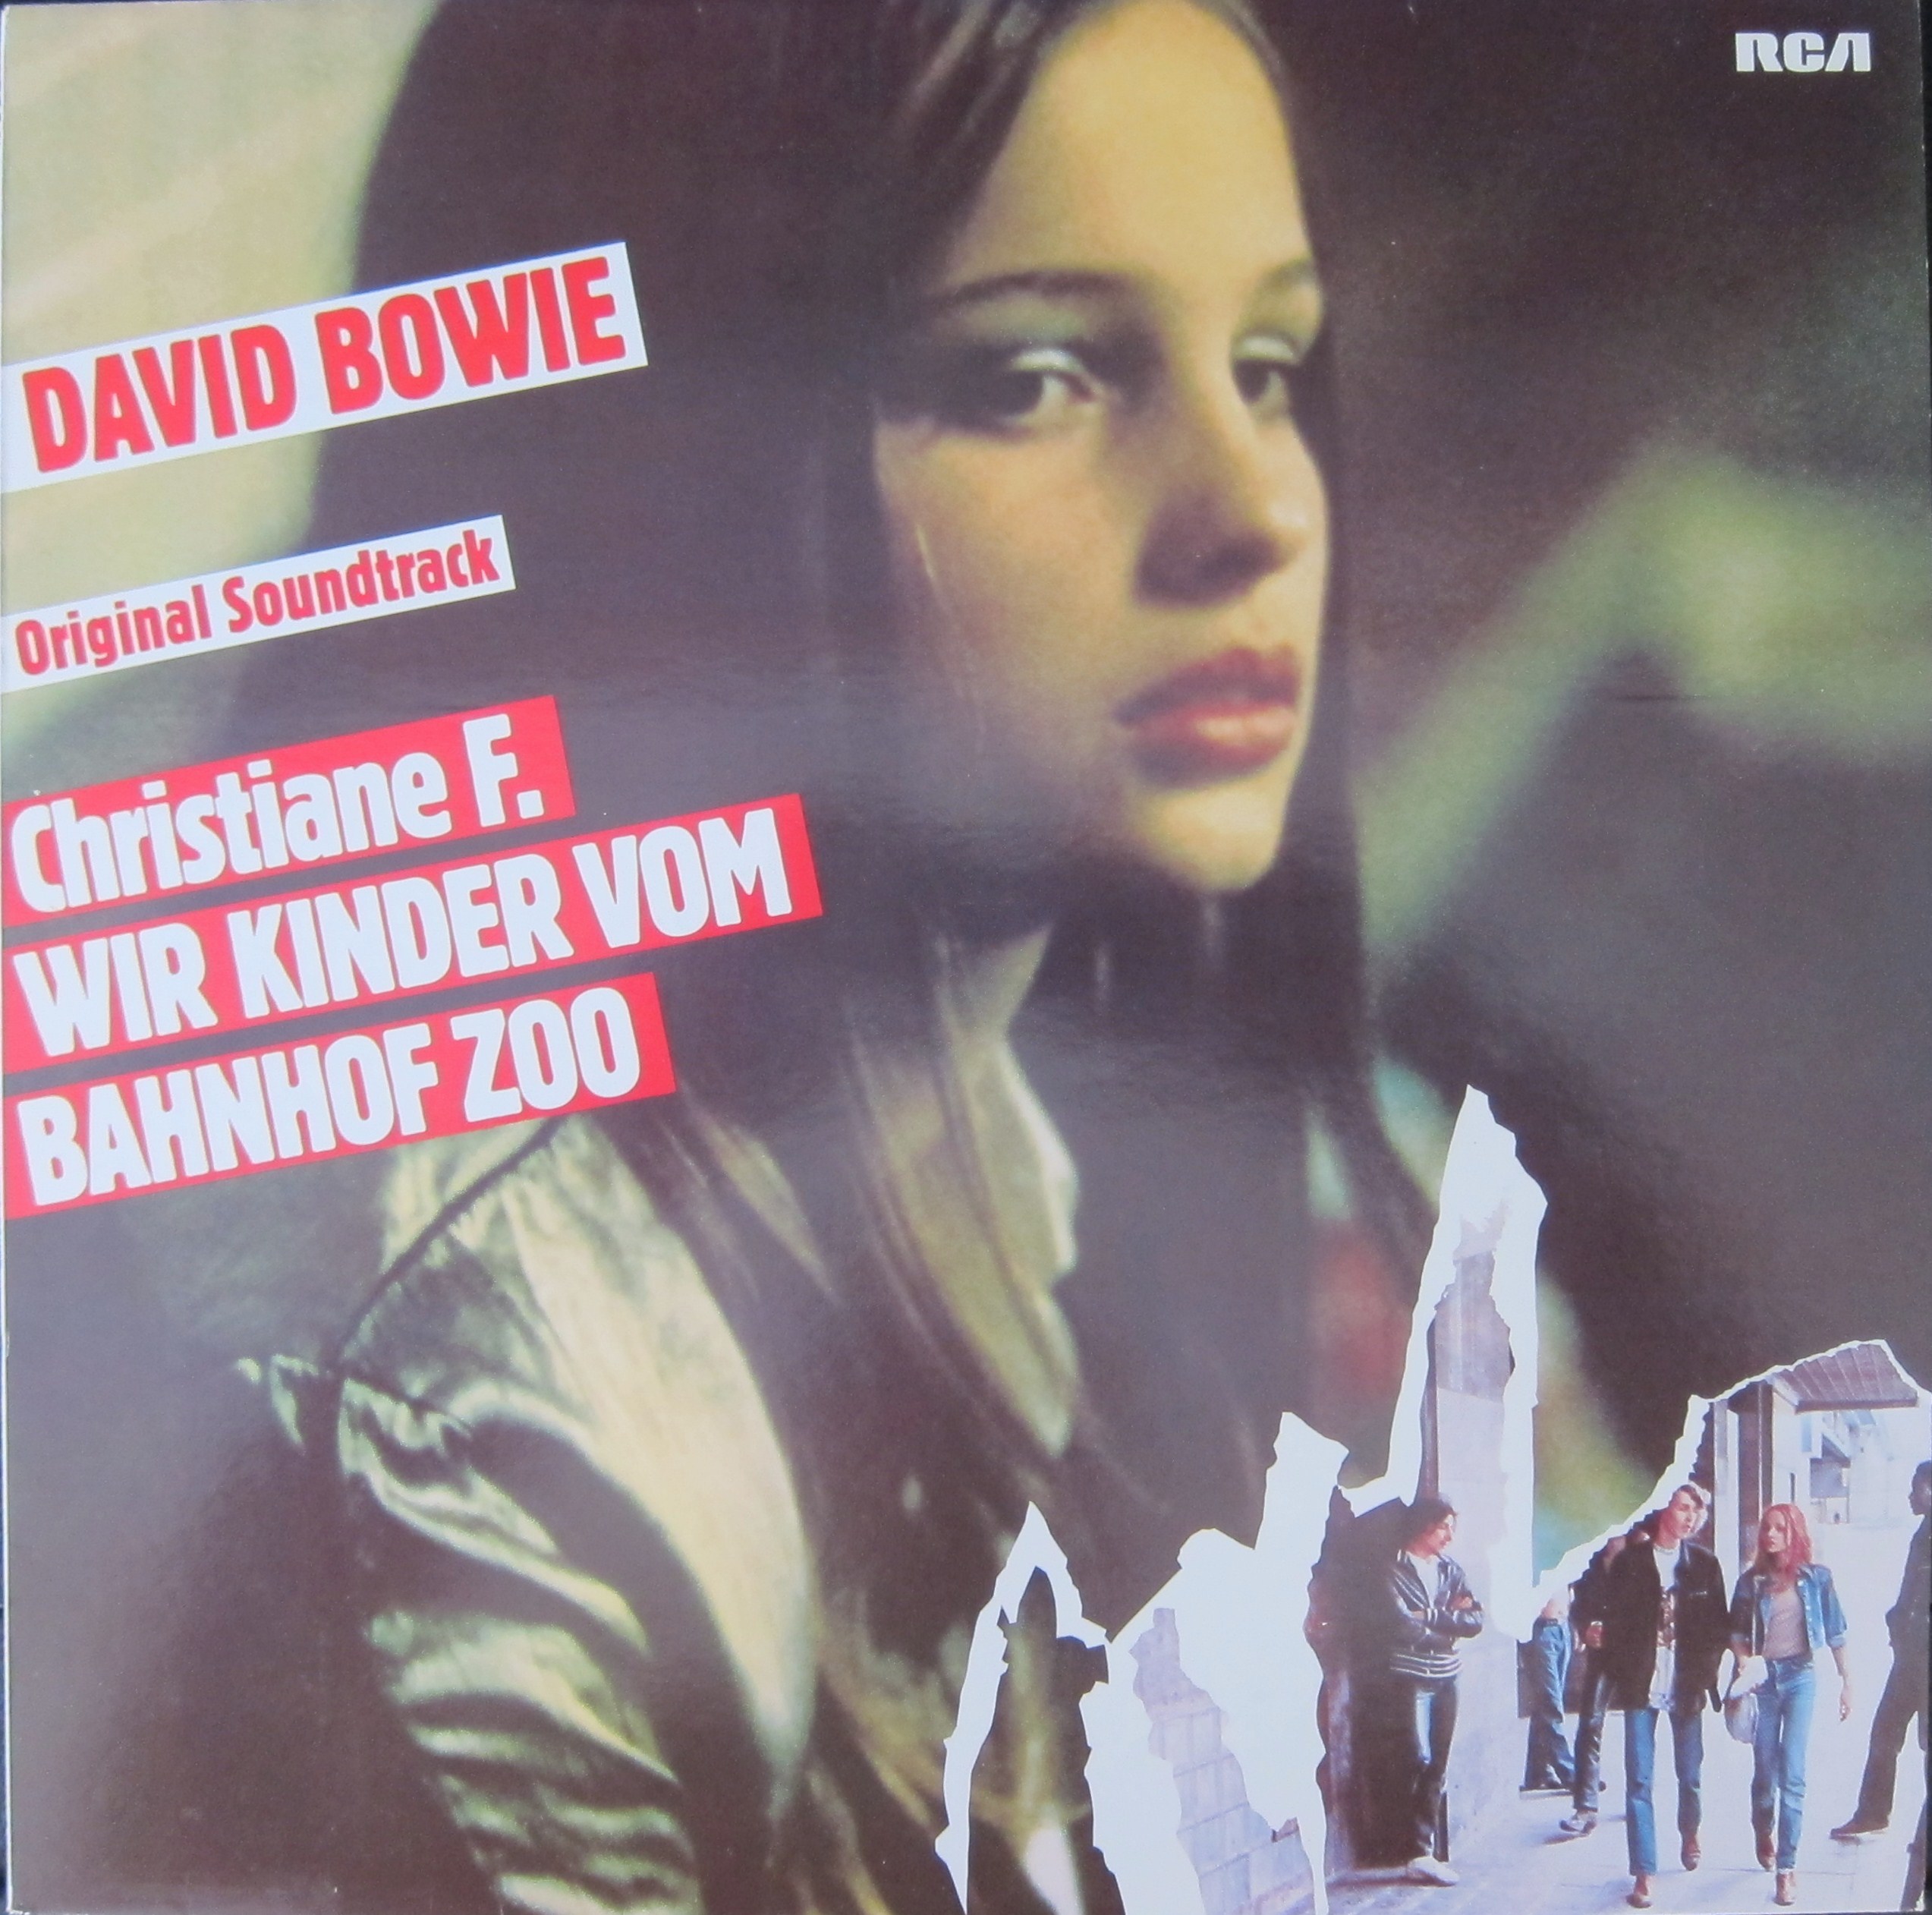 David Bowie in Germany